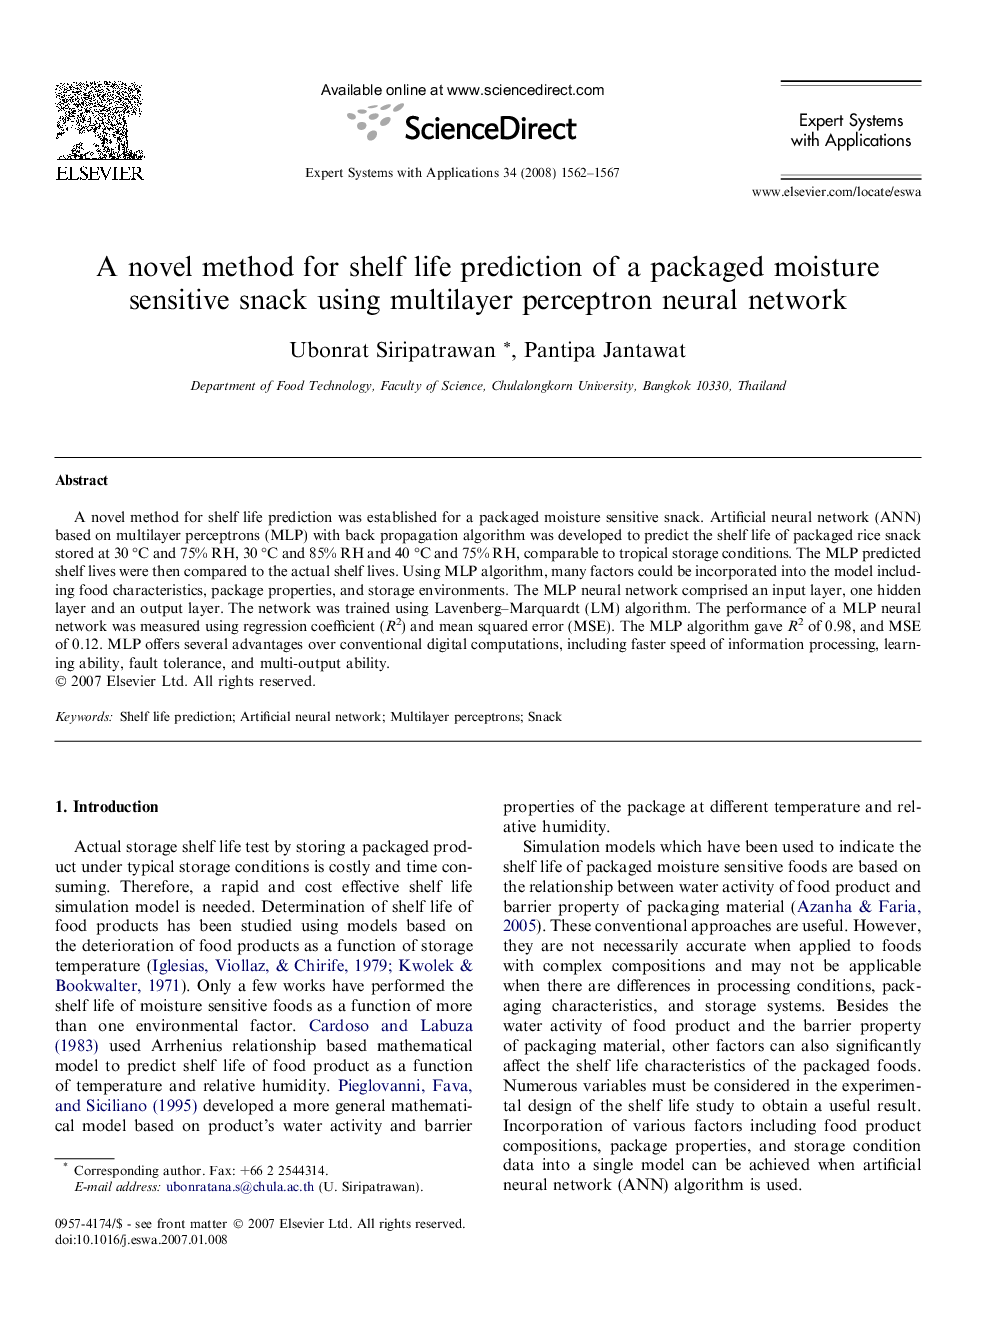 A novel method for shelf life prediction of a packaged moisture sensitive snack using multilayer perceptron neural network